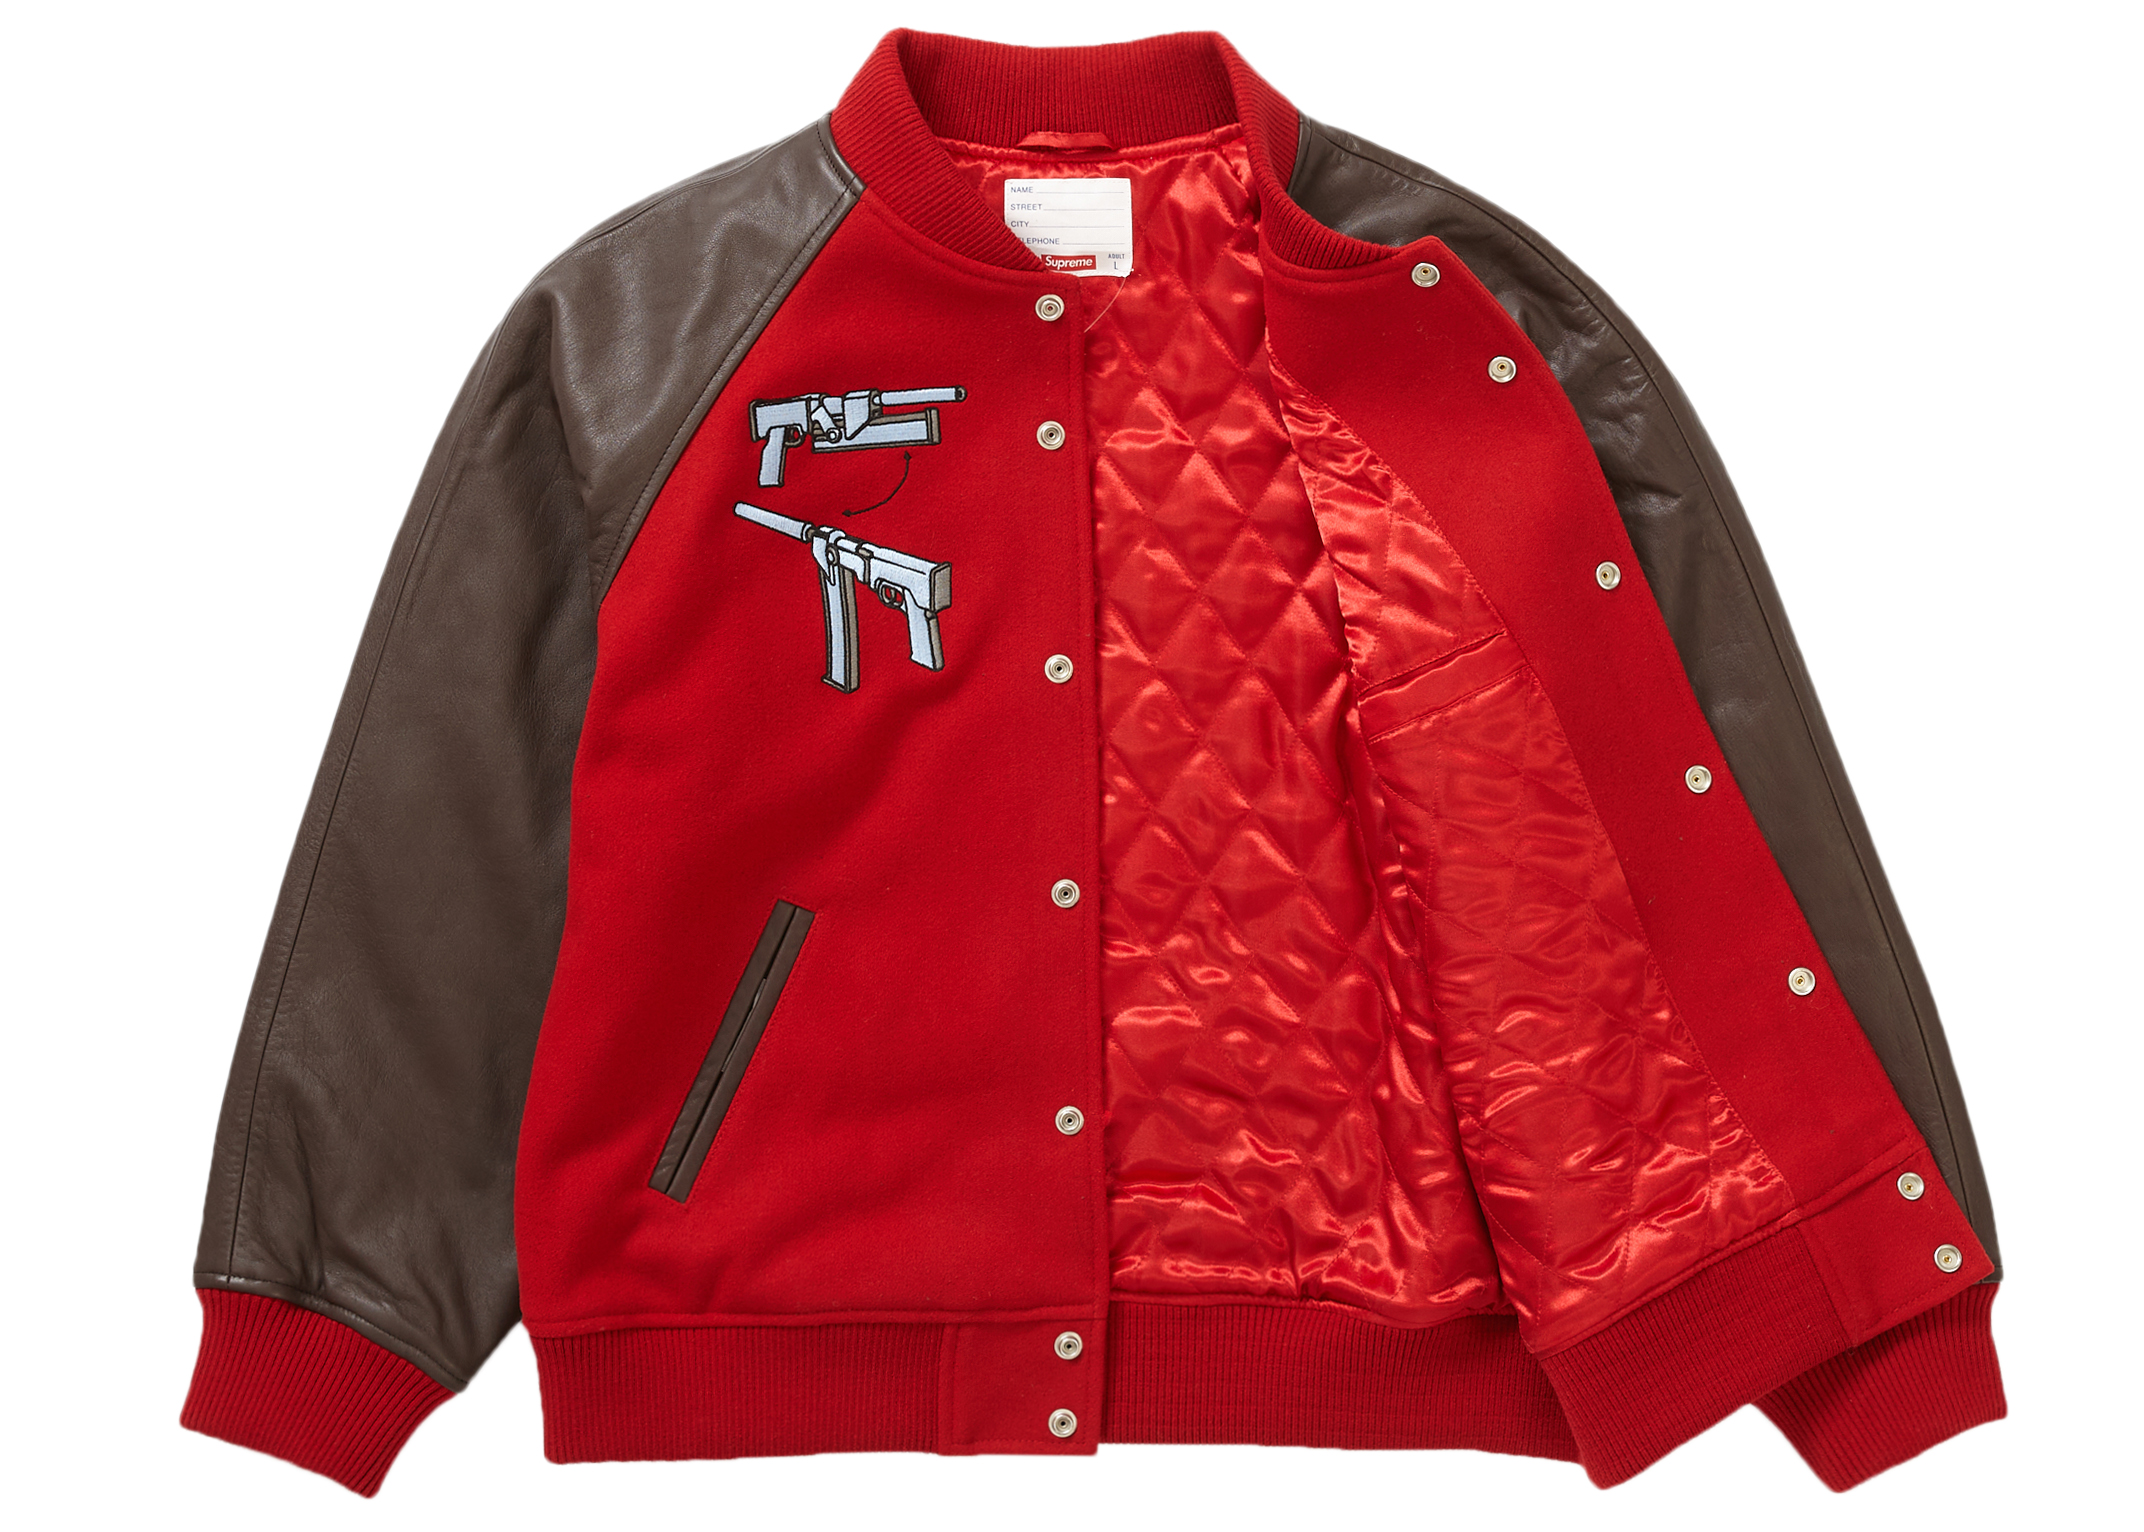 Supreme Aeon Flux Varsity Jacket Red